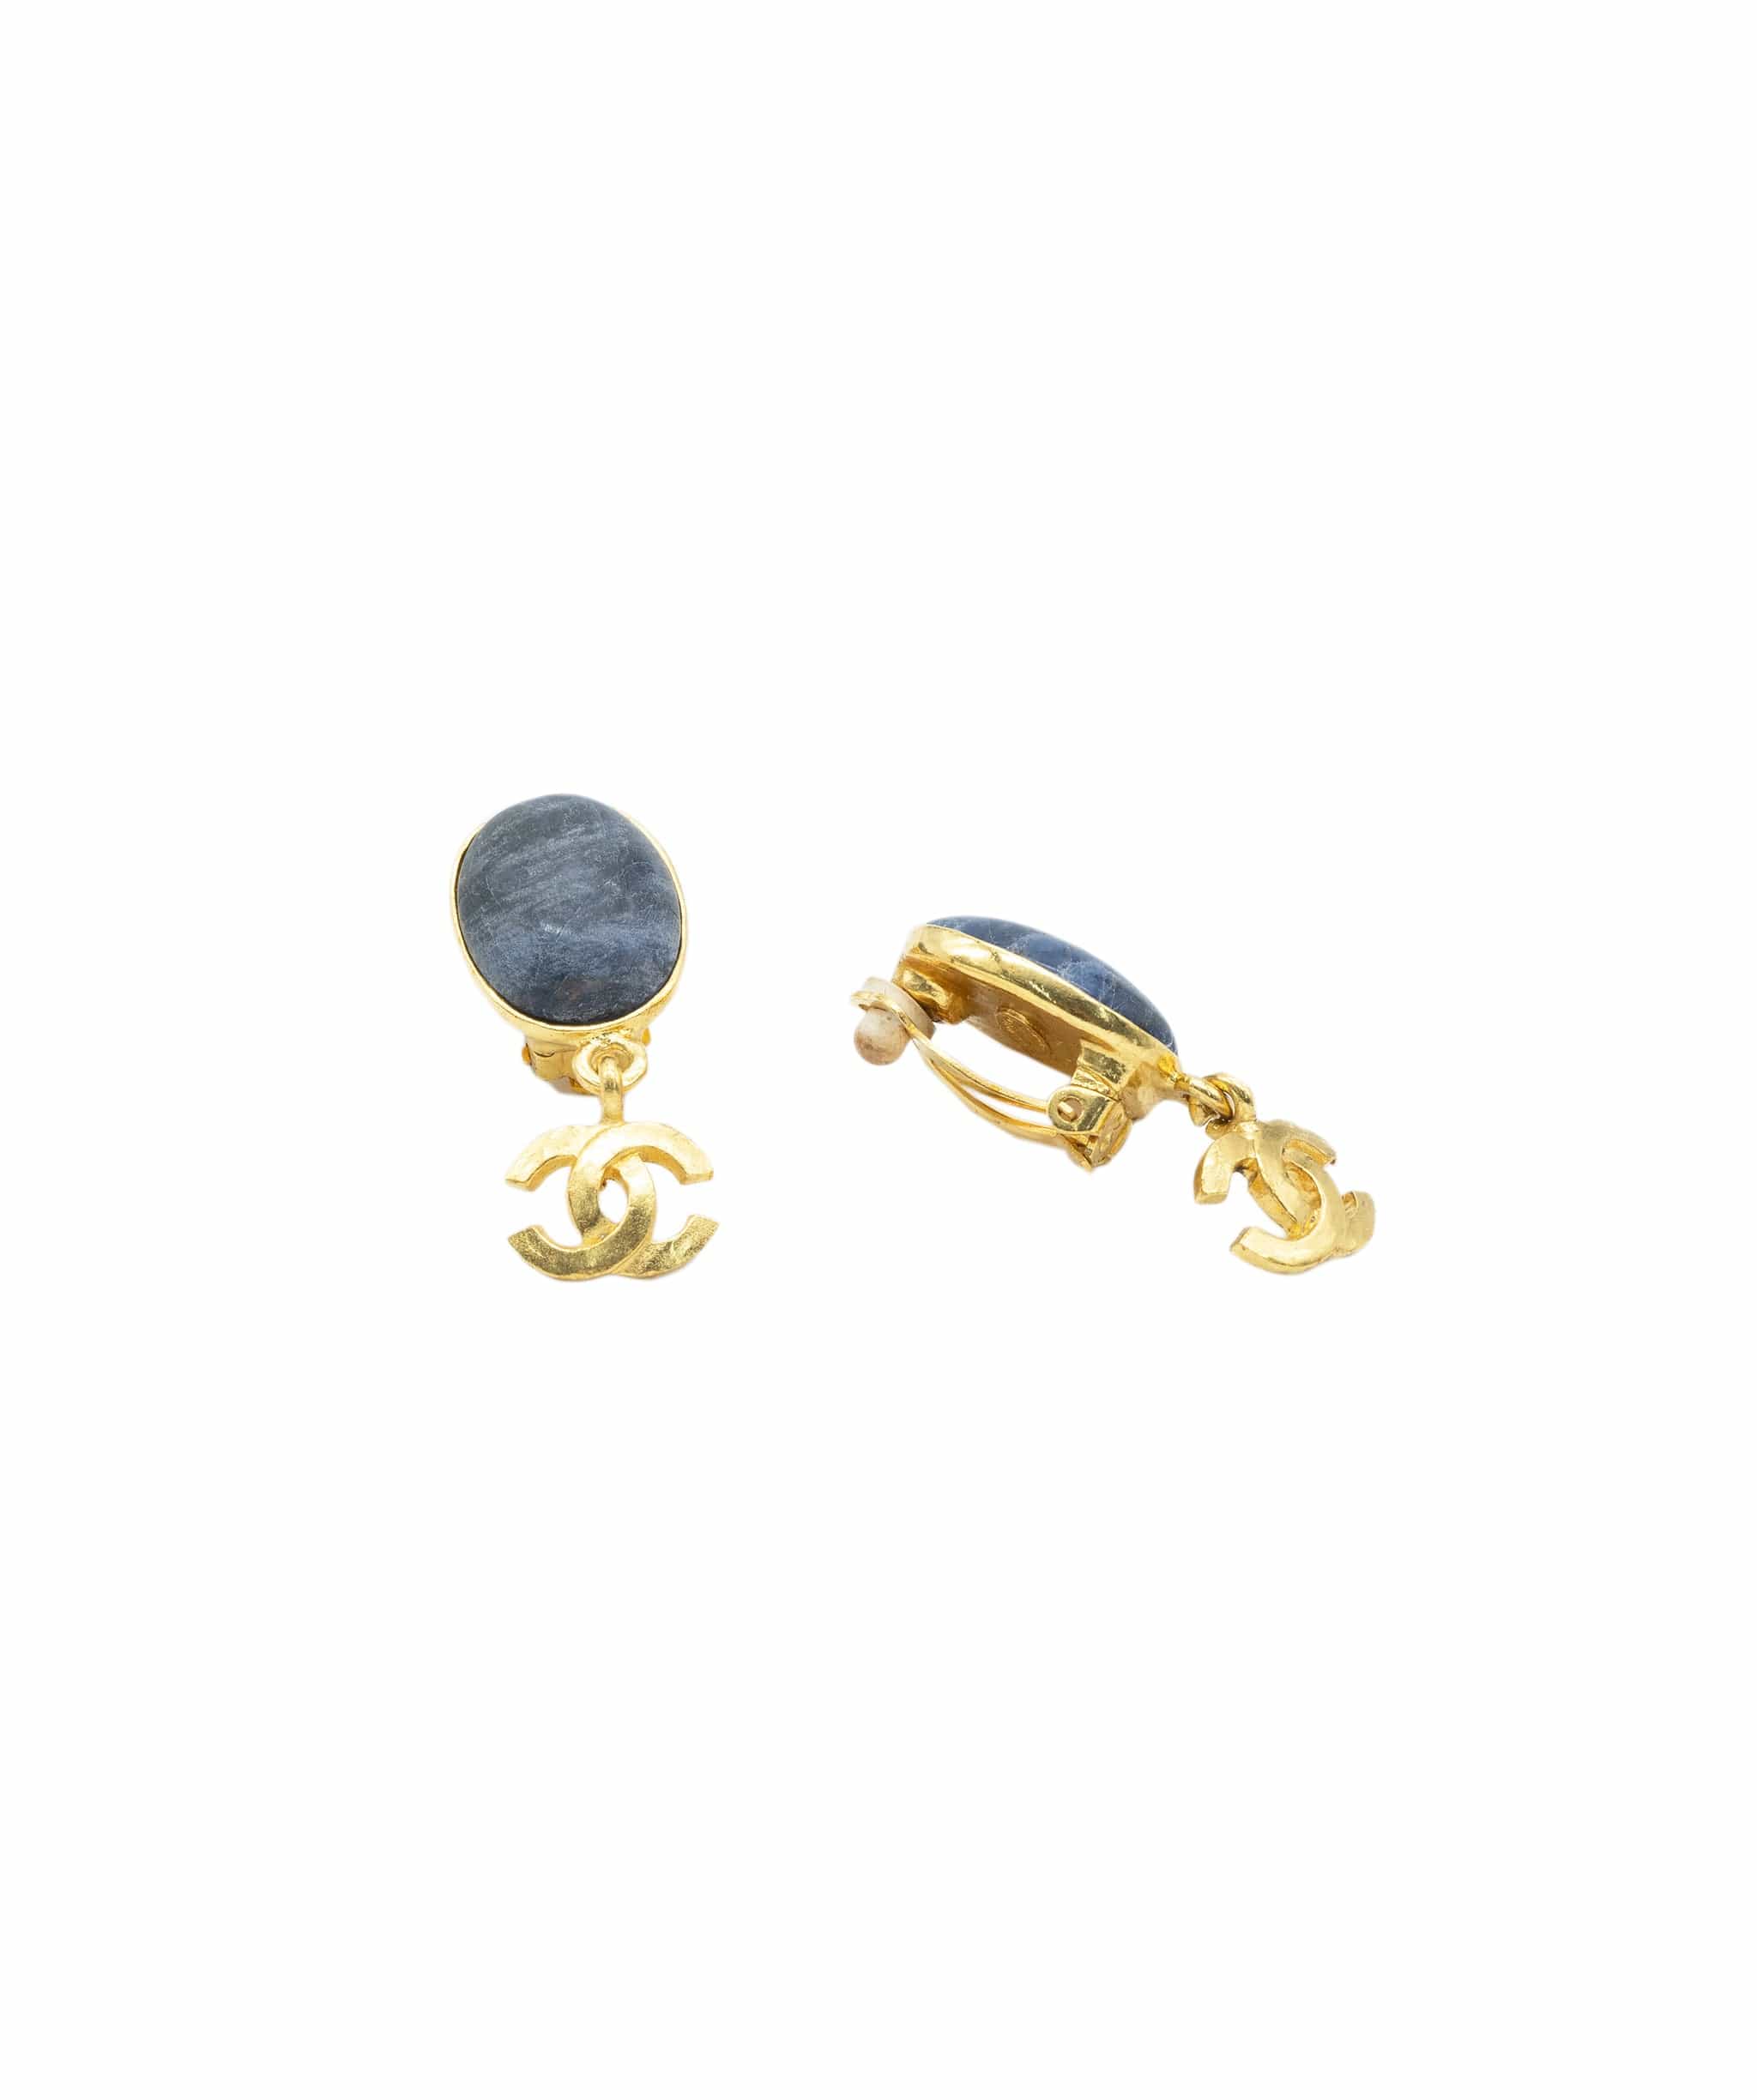 Chanel Chanel blue stone cc metal earrings ASL3538